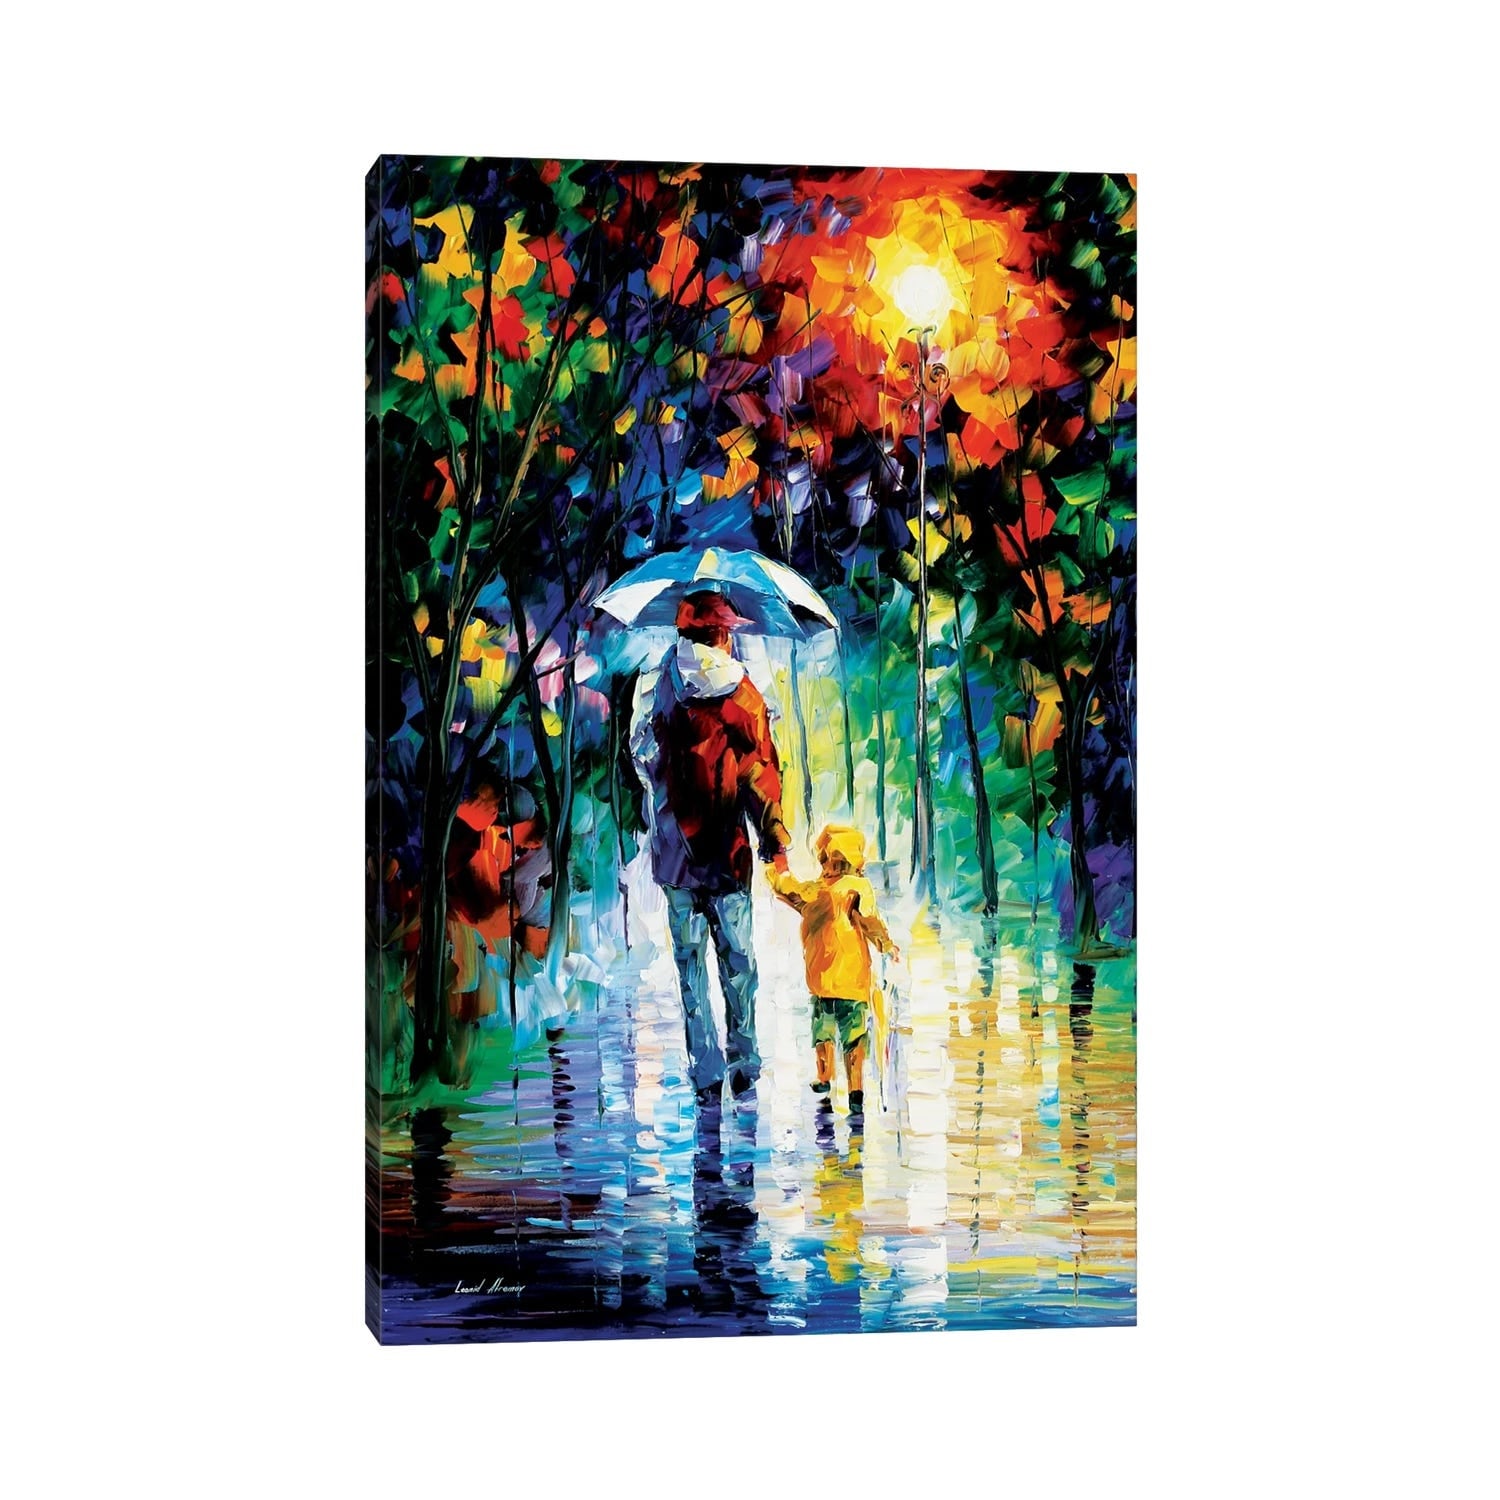 Walking in the Rain - rain painting by L.Afremov